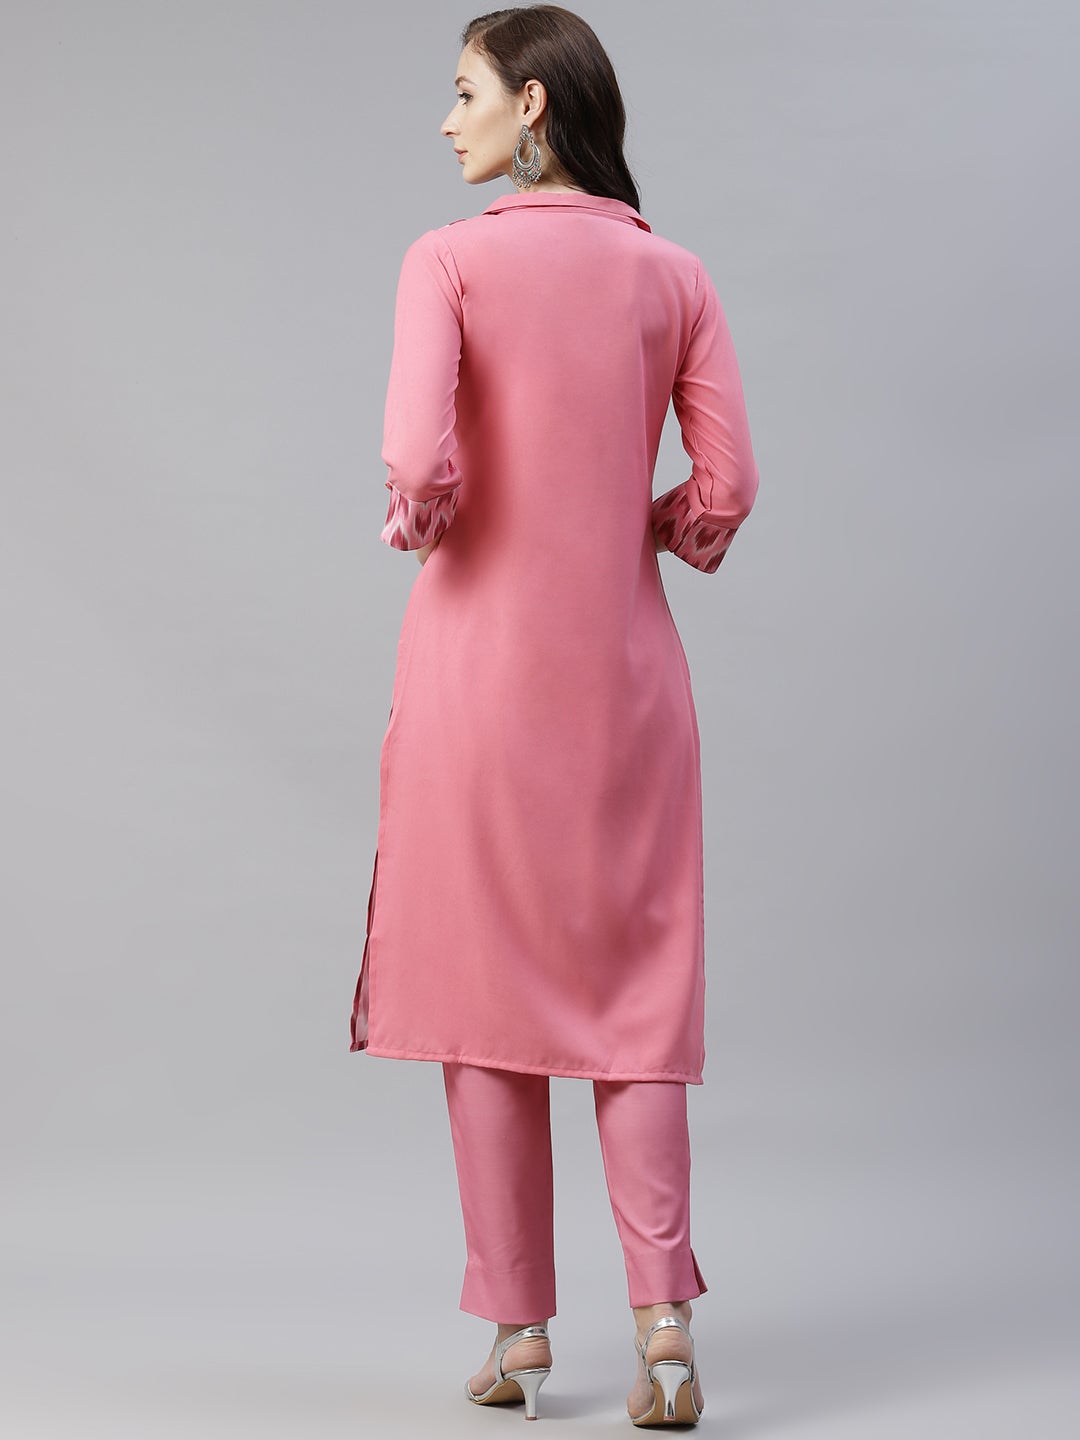 Mindhal Women's Pink Color Digital Printed Straight Kurta And Pant Set